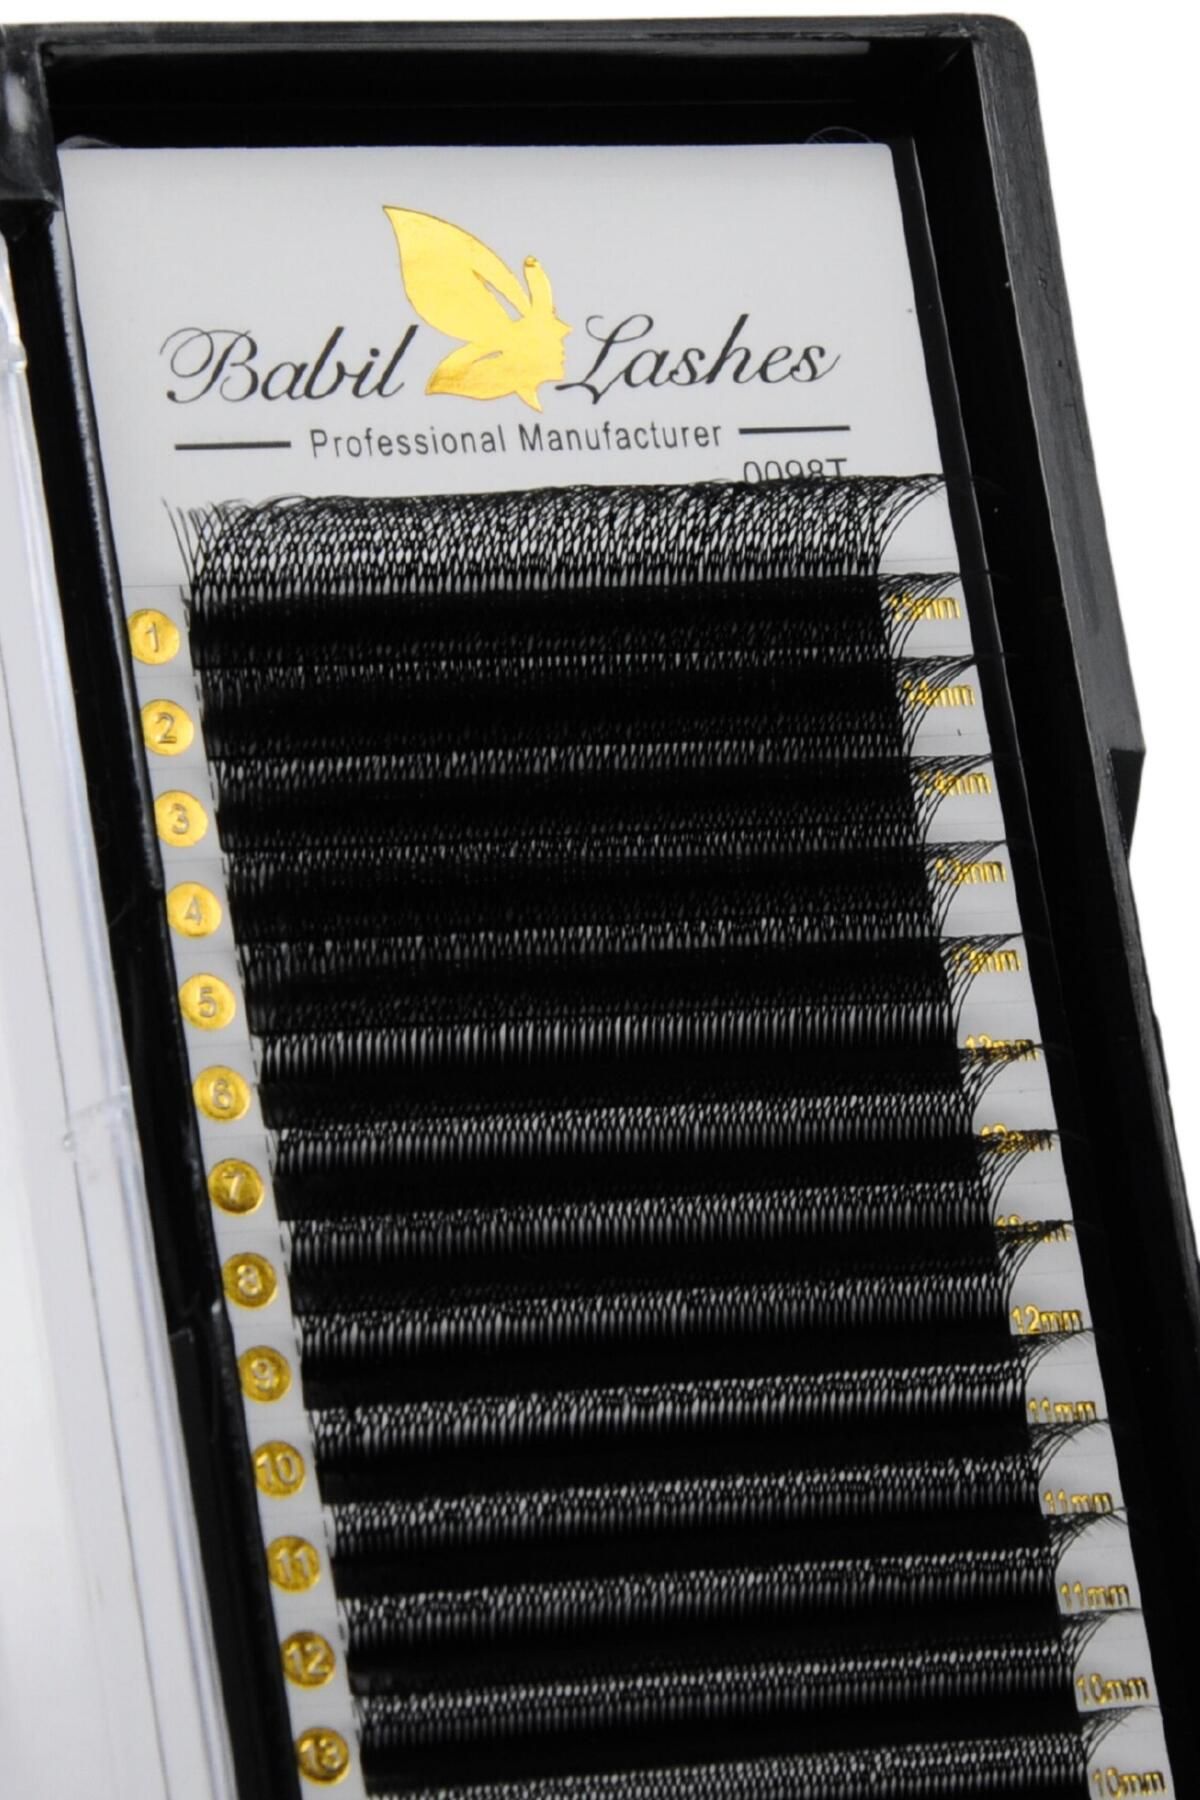 BABIL LASHES İpek Kirpik , W 6P CC Kıvrım , 0.07 Kalınlık , Mix 8-15 mm , B.ABIL LASHES , 16 Sıra